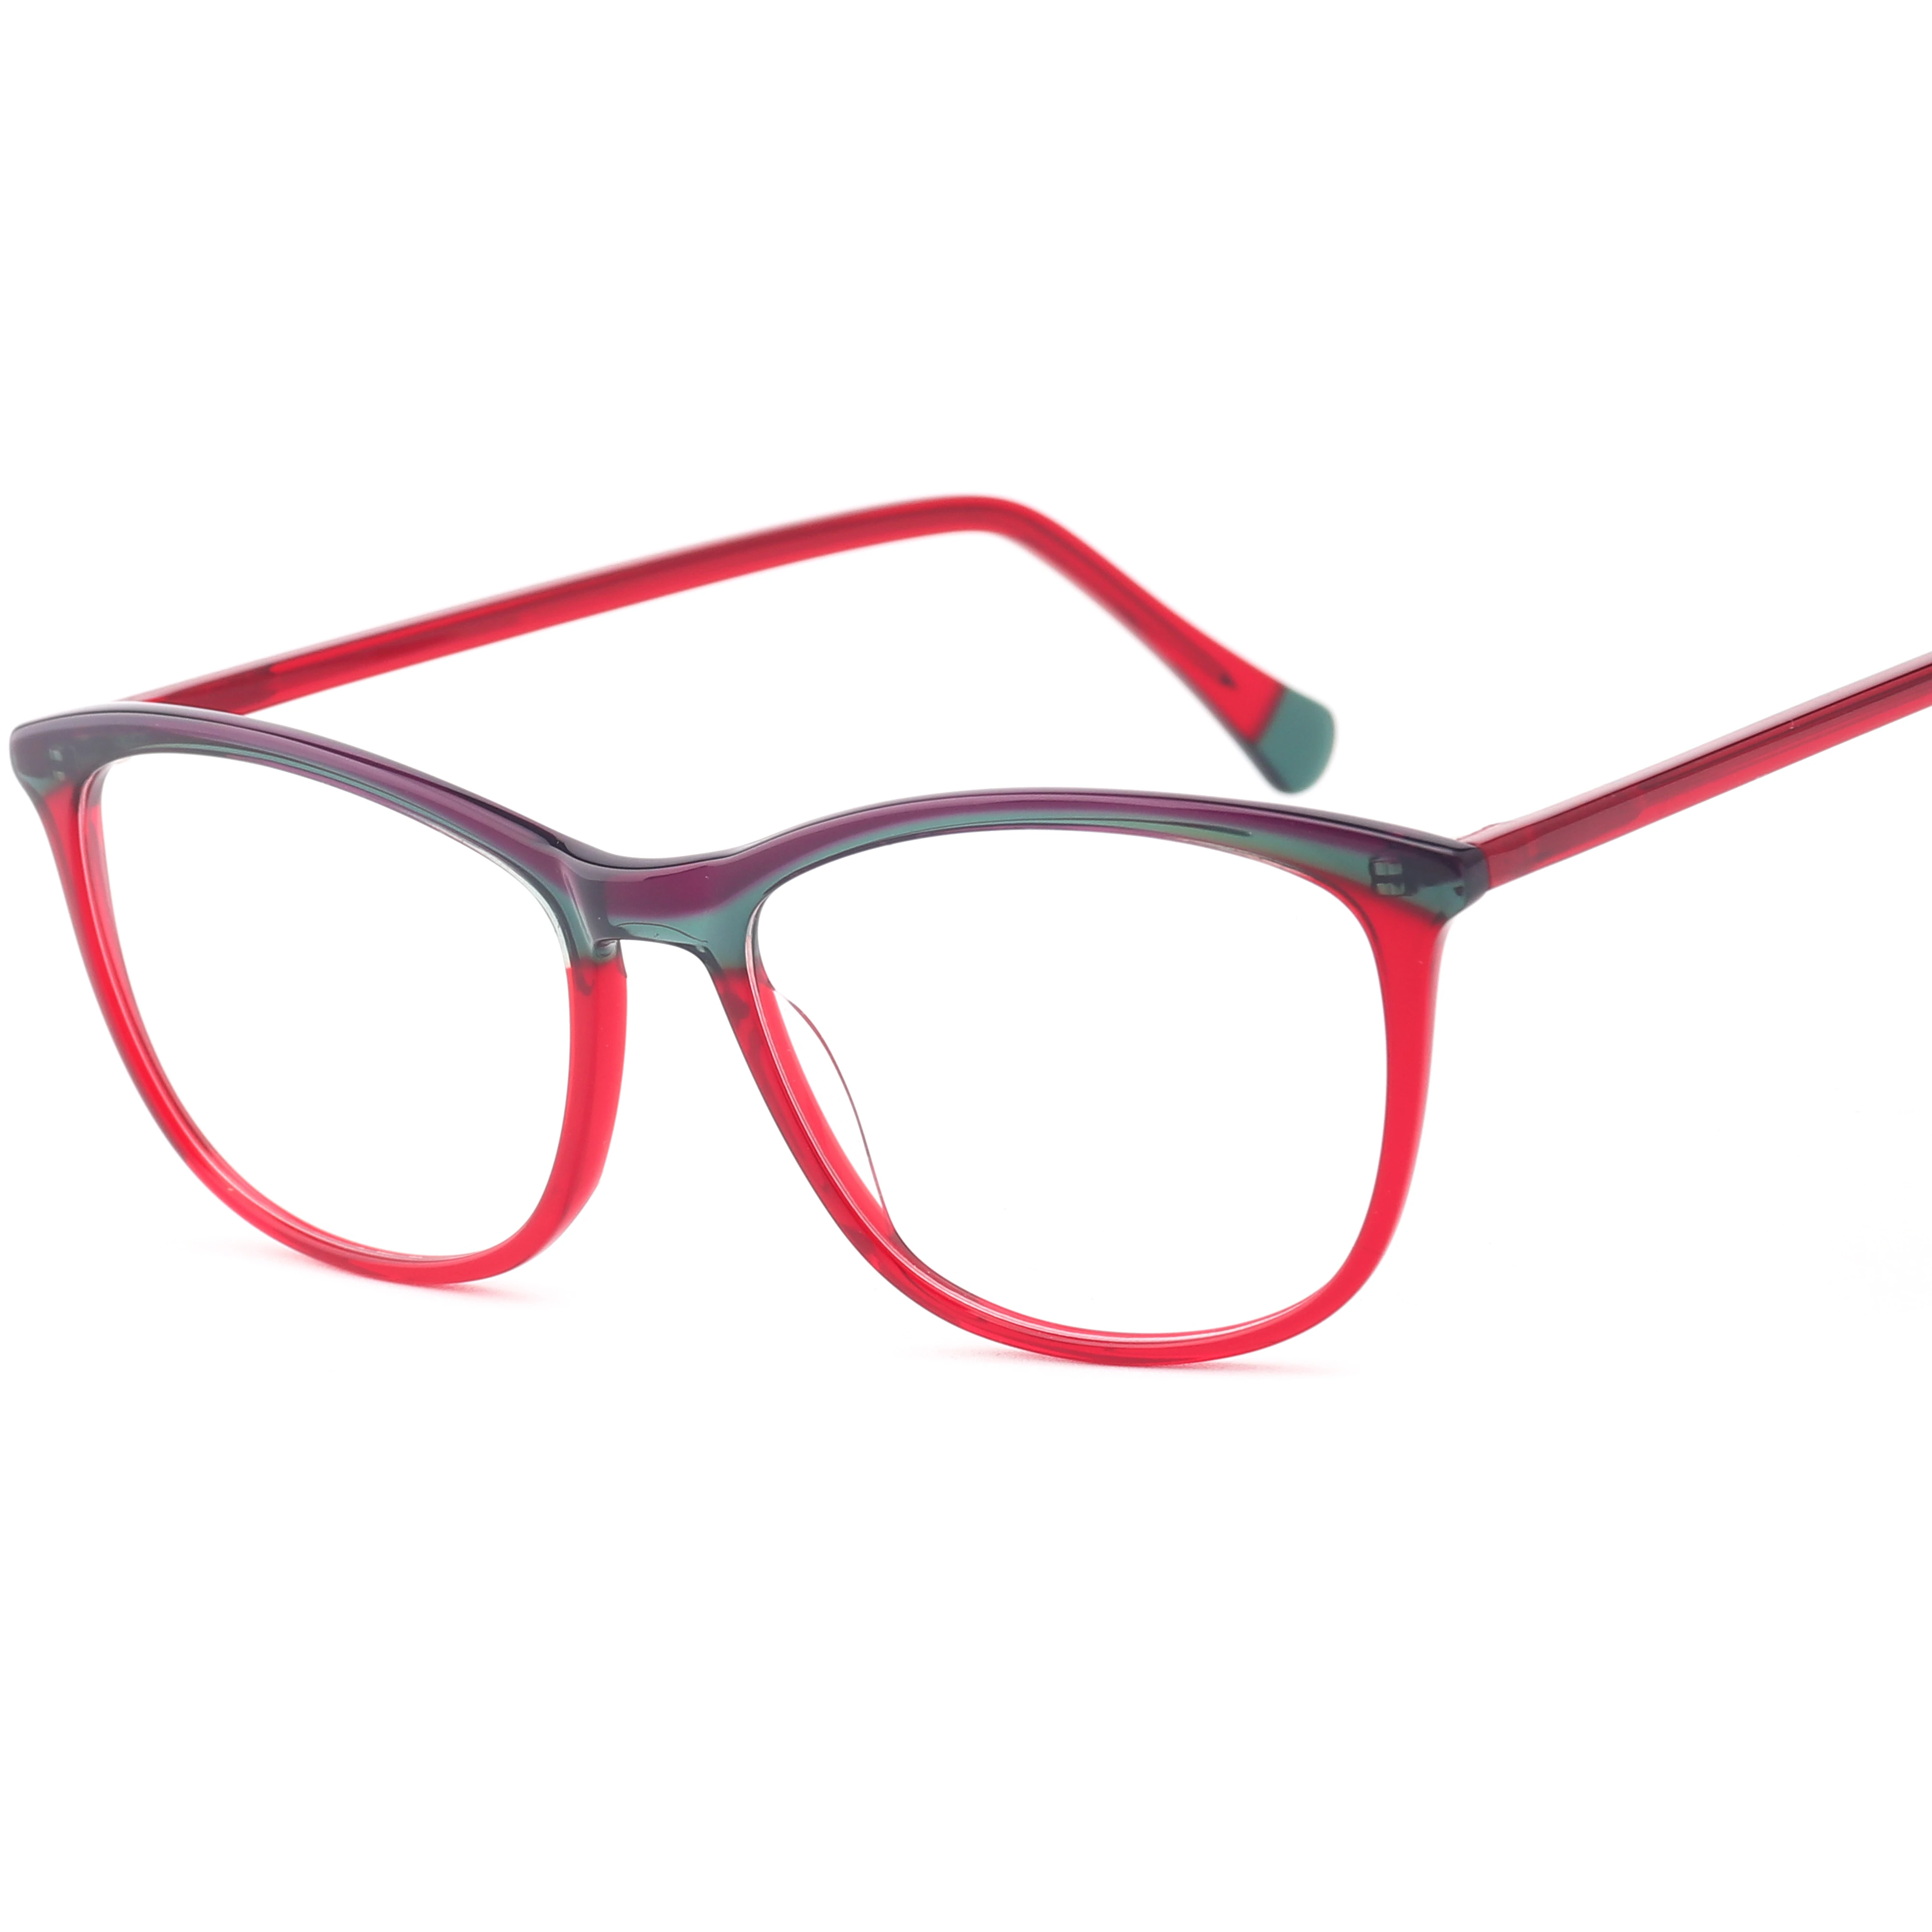 

BOA1107 2020 Italy design ce acetate optical glasses frames china manufacturers, Pic or customized